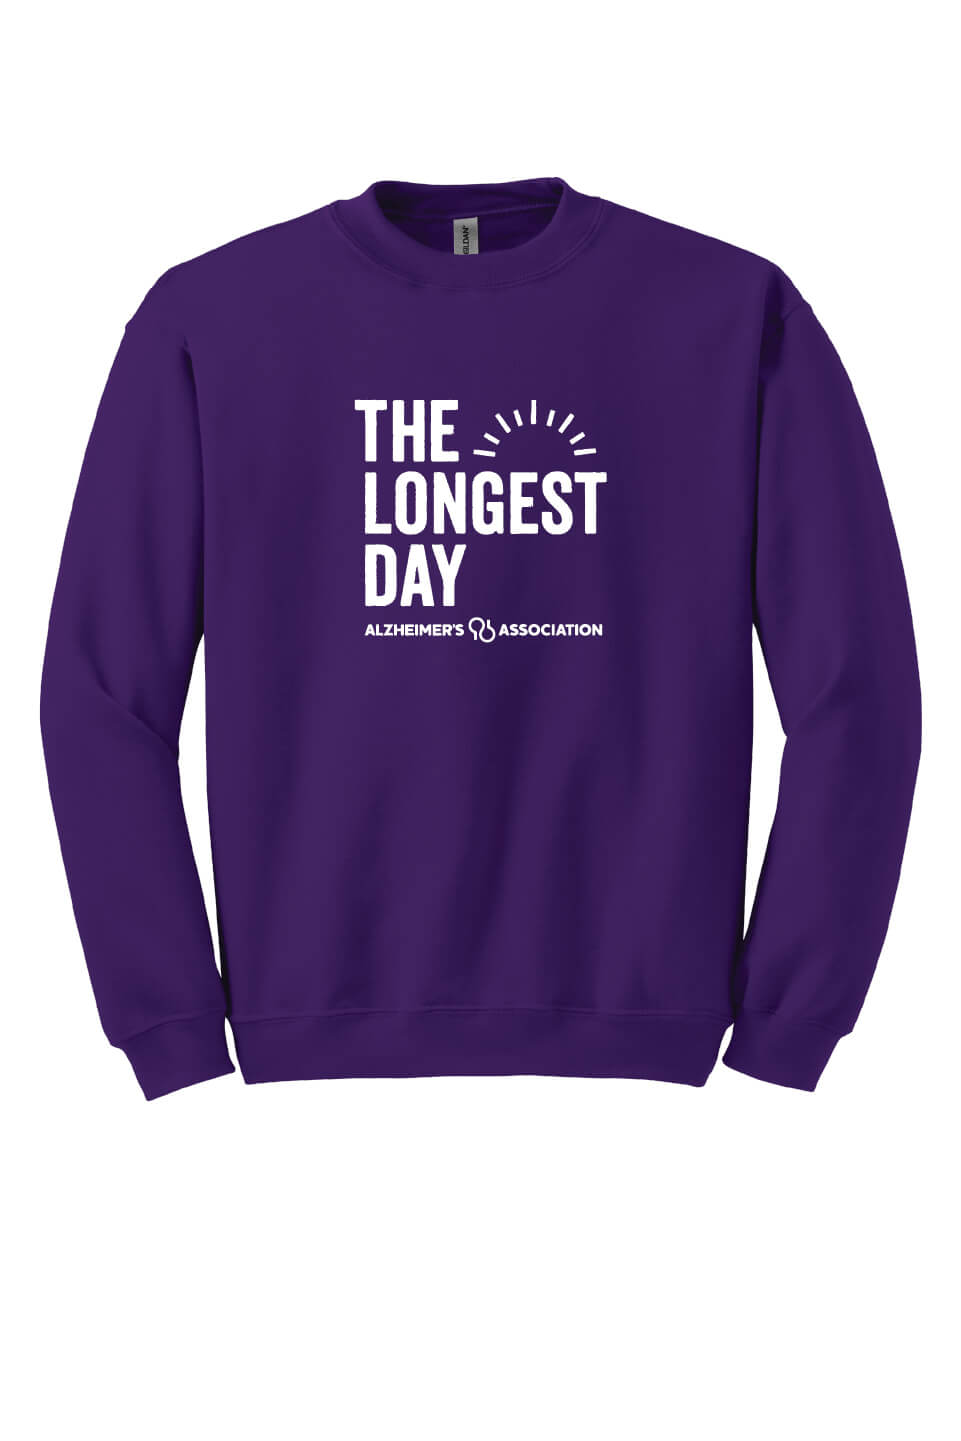 The Longest Day Crewneck Sweatshirt vertical purple